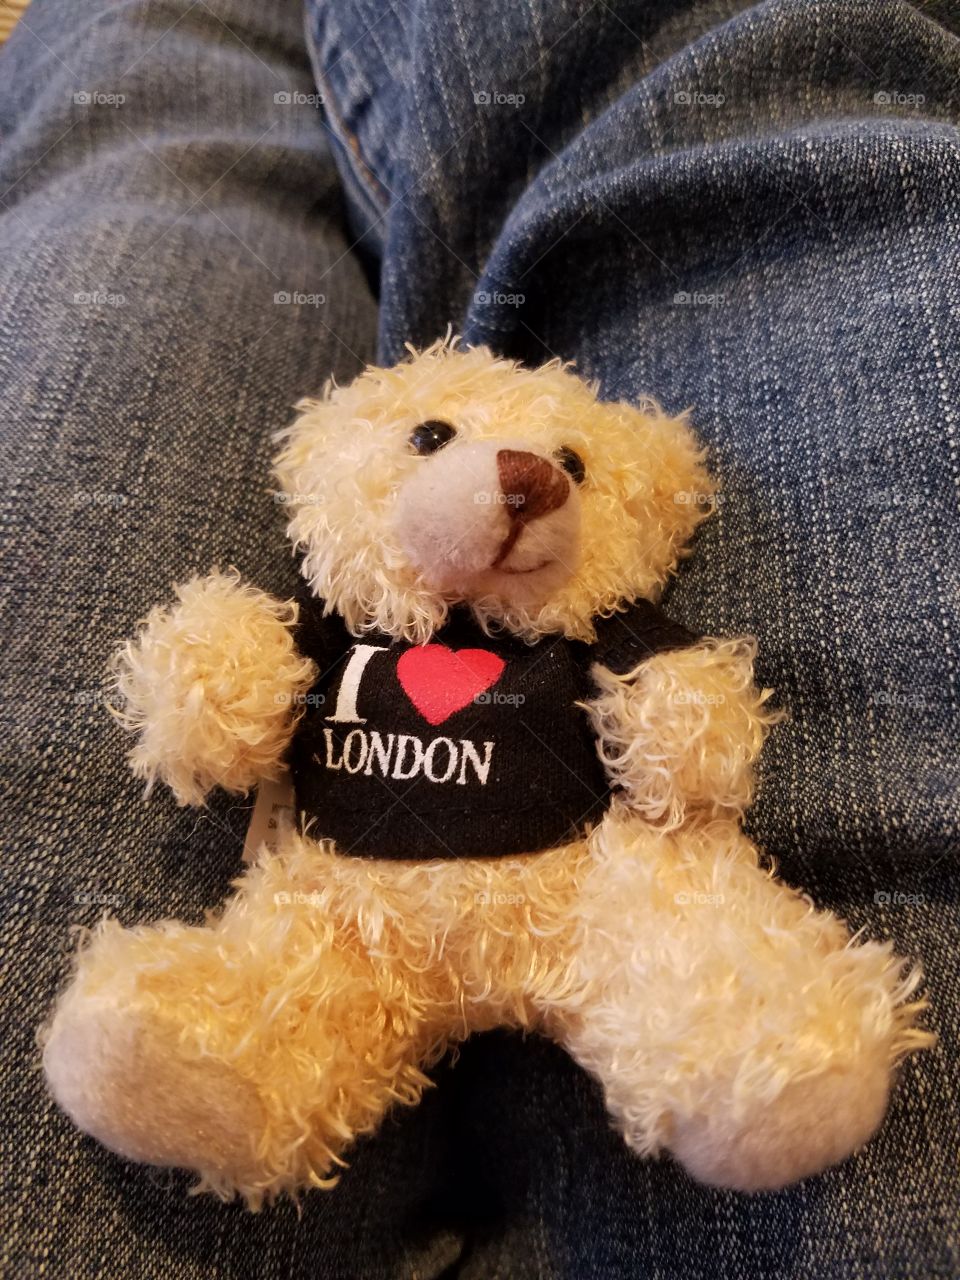 I Love London teddy bear keychain